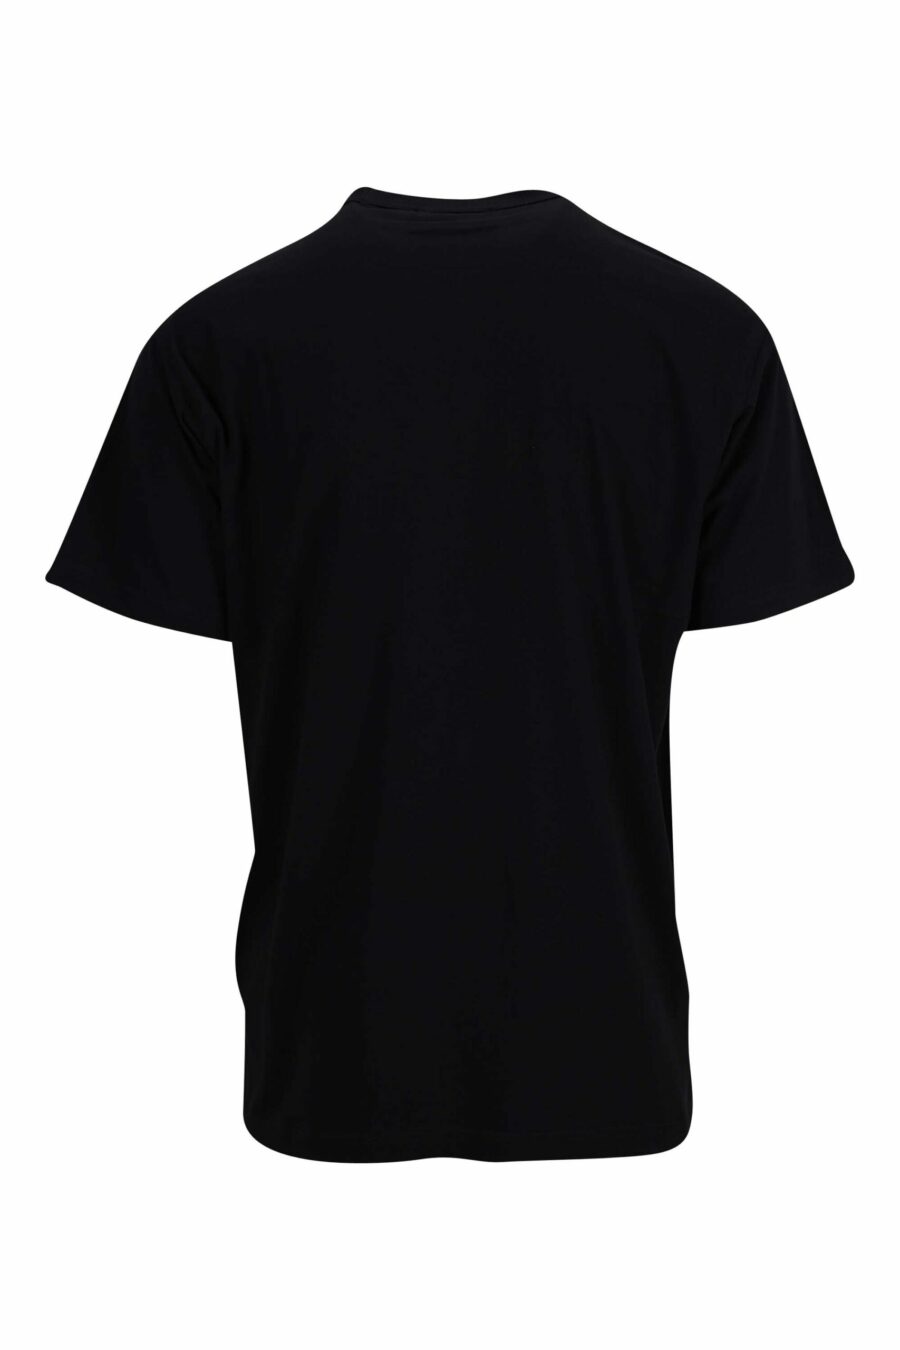 T-shirt preta com mini-logotipo circular azul metalizado - 8052019402216 1 à escala